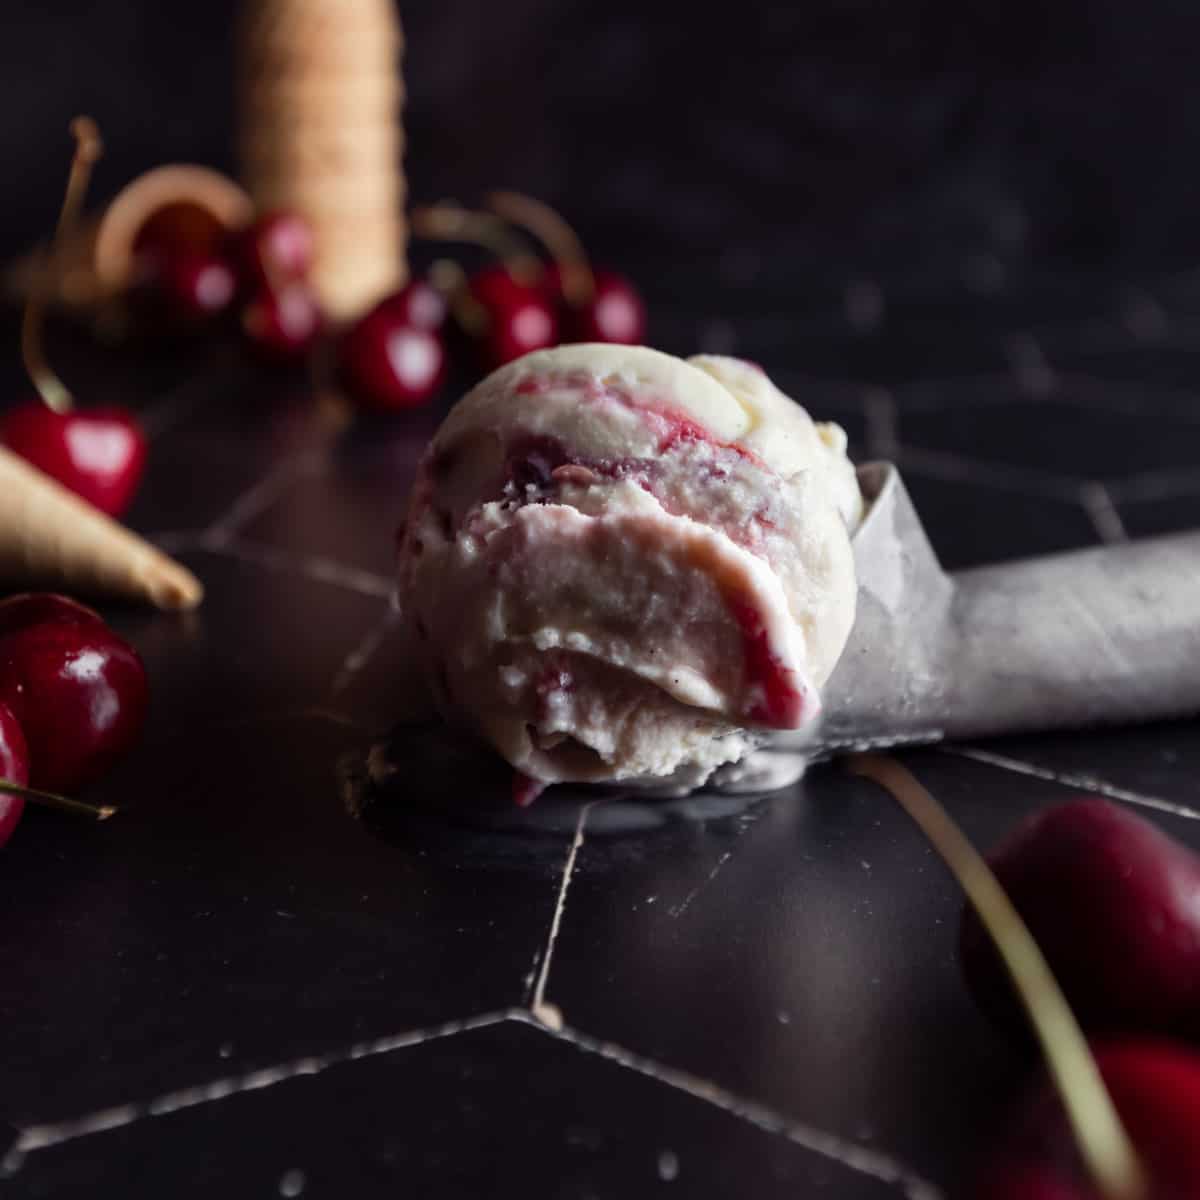 A close up of a scoop of cherry vanilla ice cream